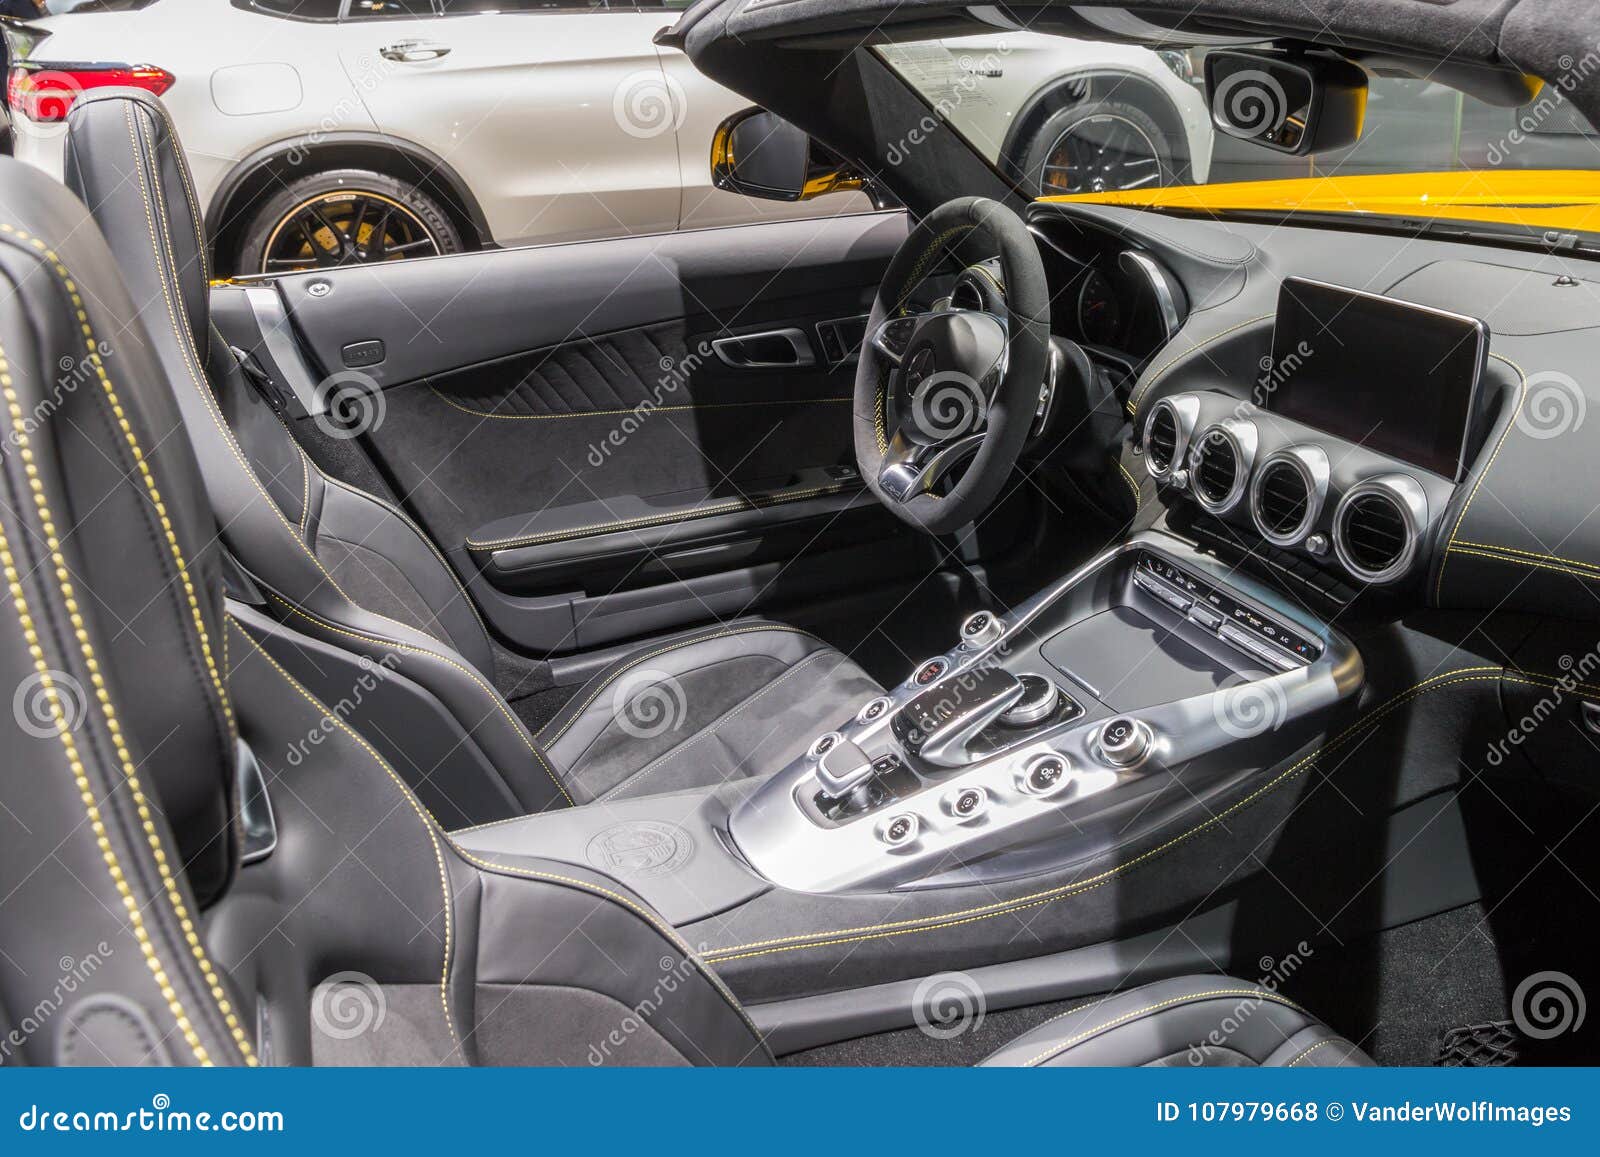 Mercedes Amg Sls Gt Sports Car Editorial Stock Photo Image